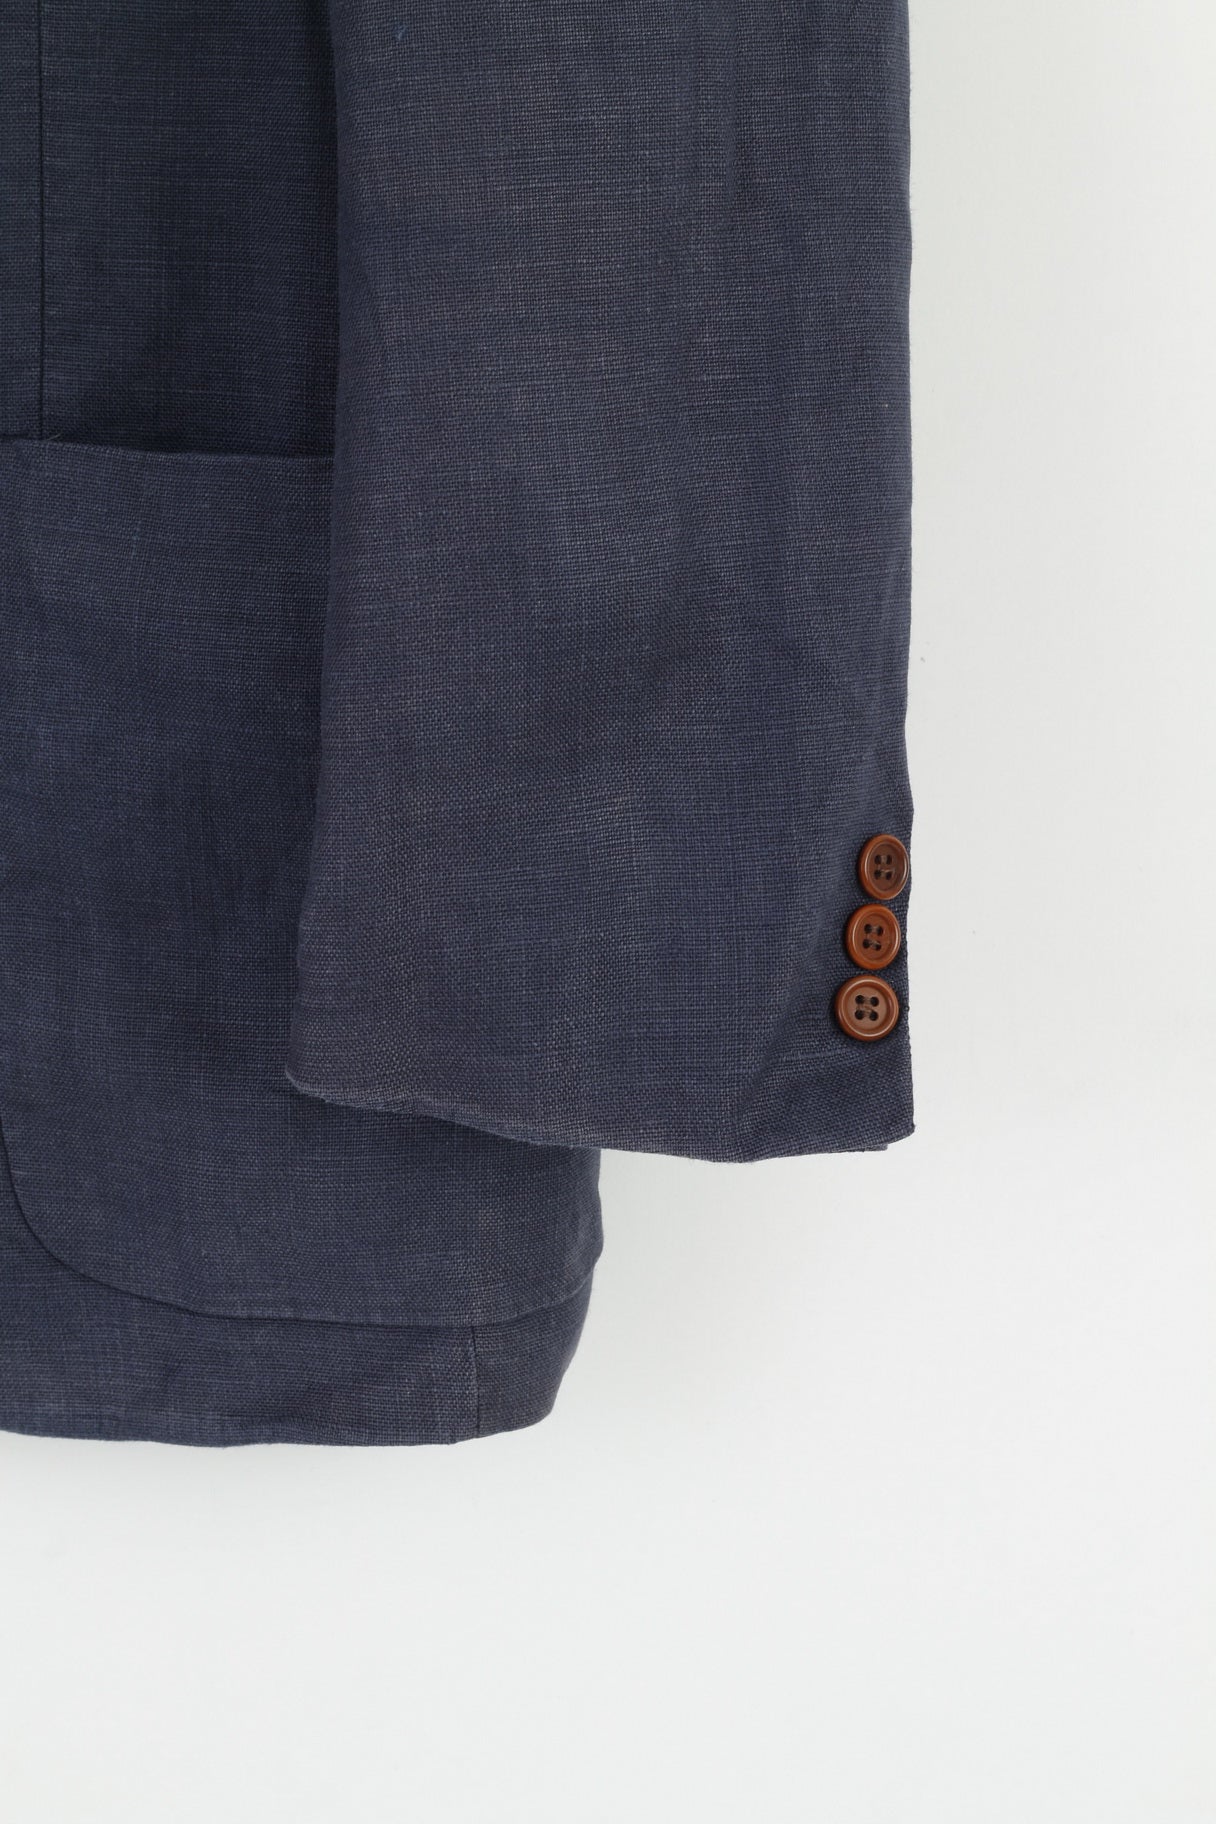 Atelier Torino By Konen Munchen Mens 54 Blazer Navy Vintage 100% Linen Robert Old Jacket